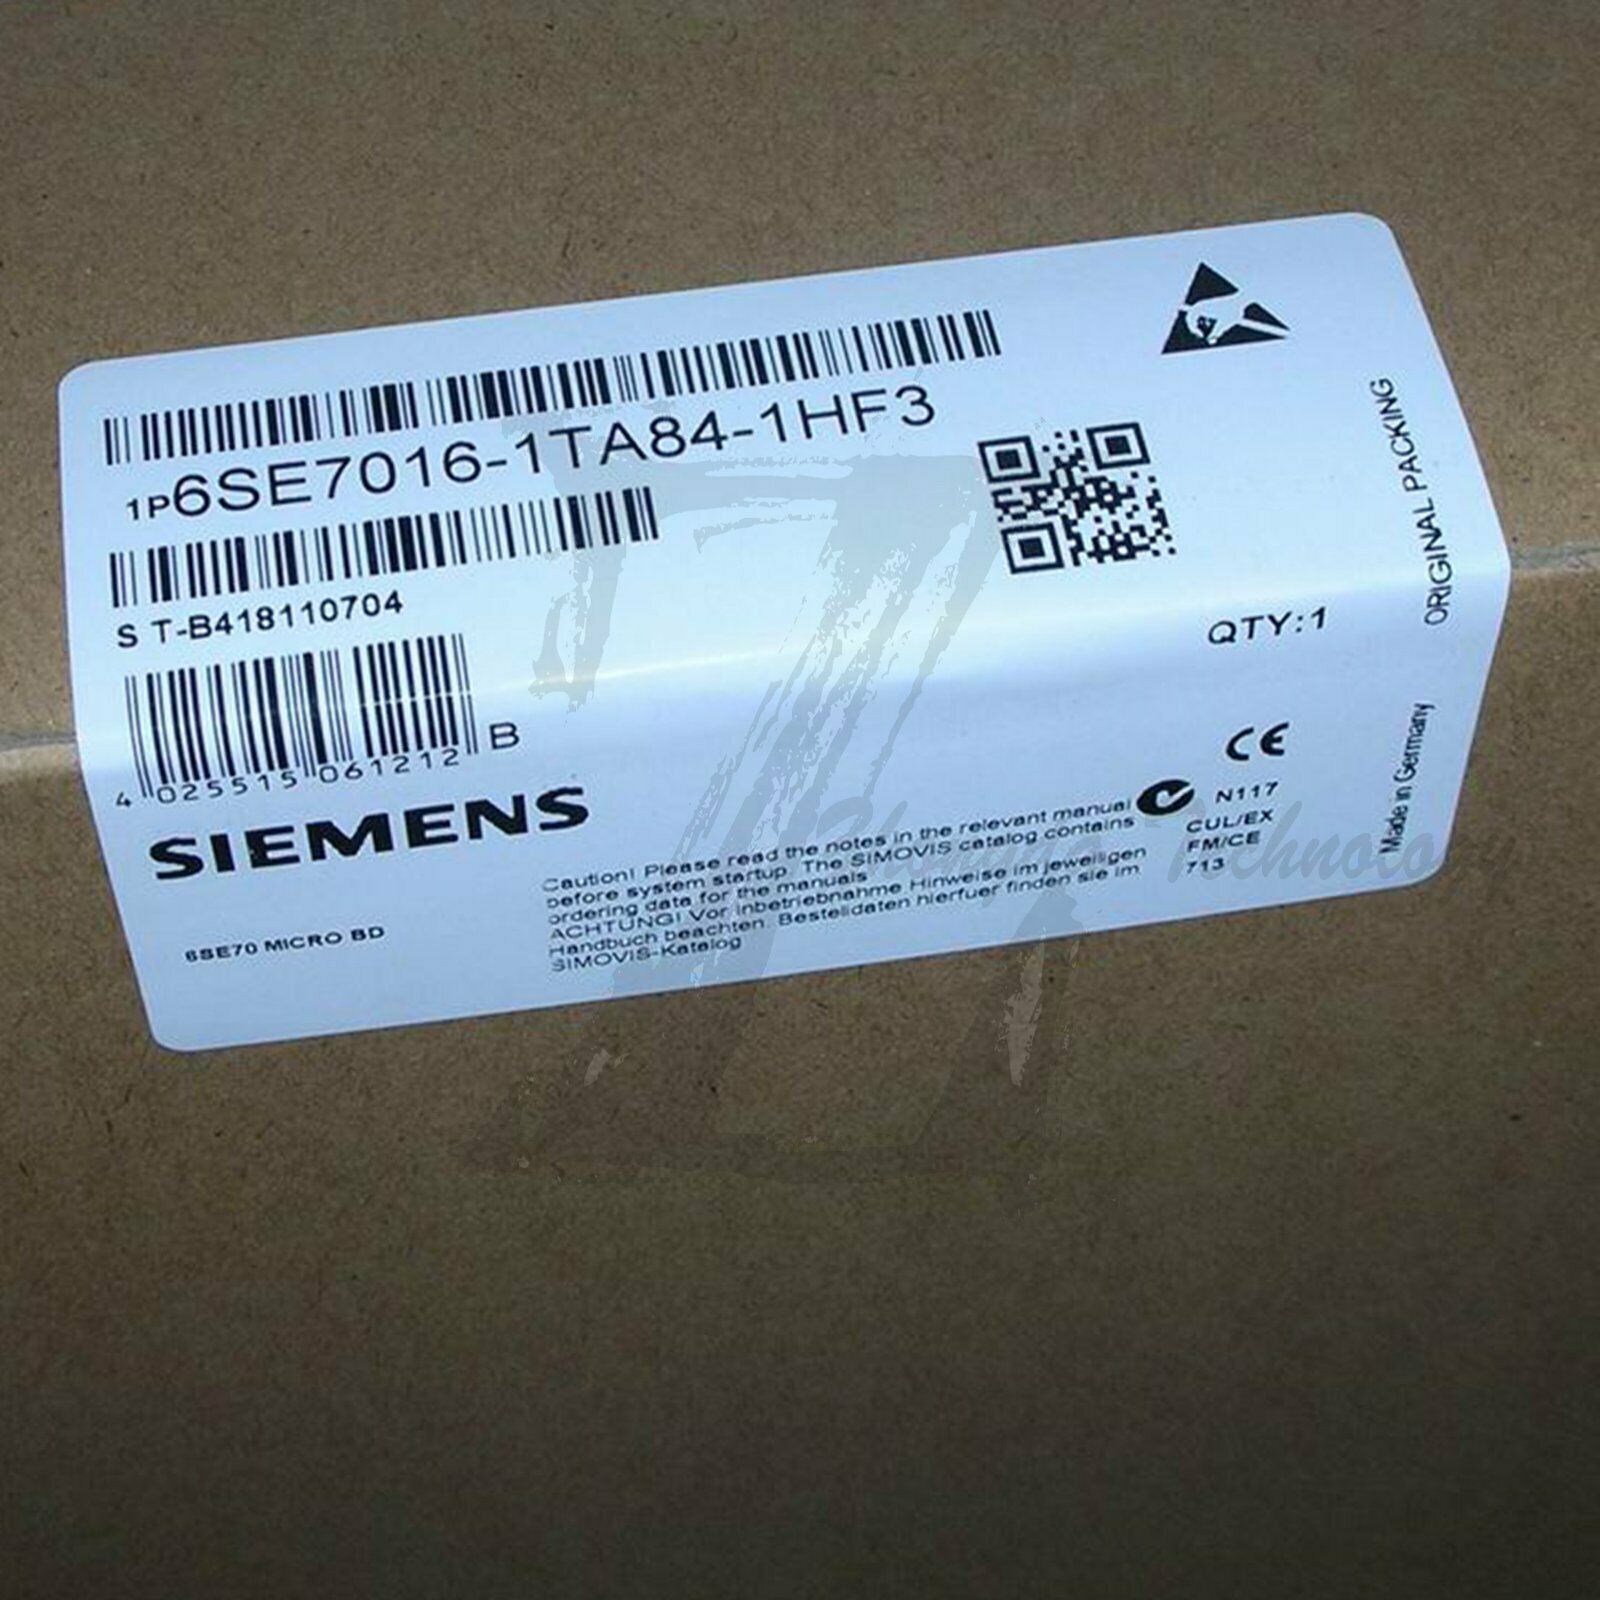 New Siemens, inverter base power board main board 6SE7016-1TA84-1HF3